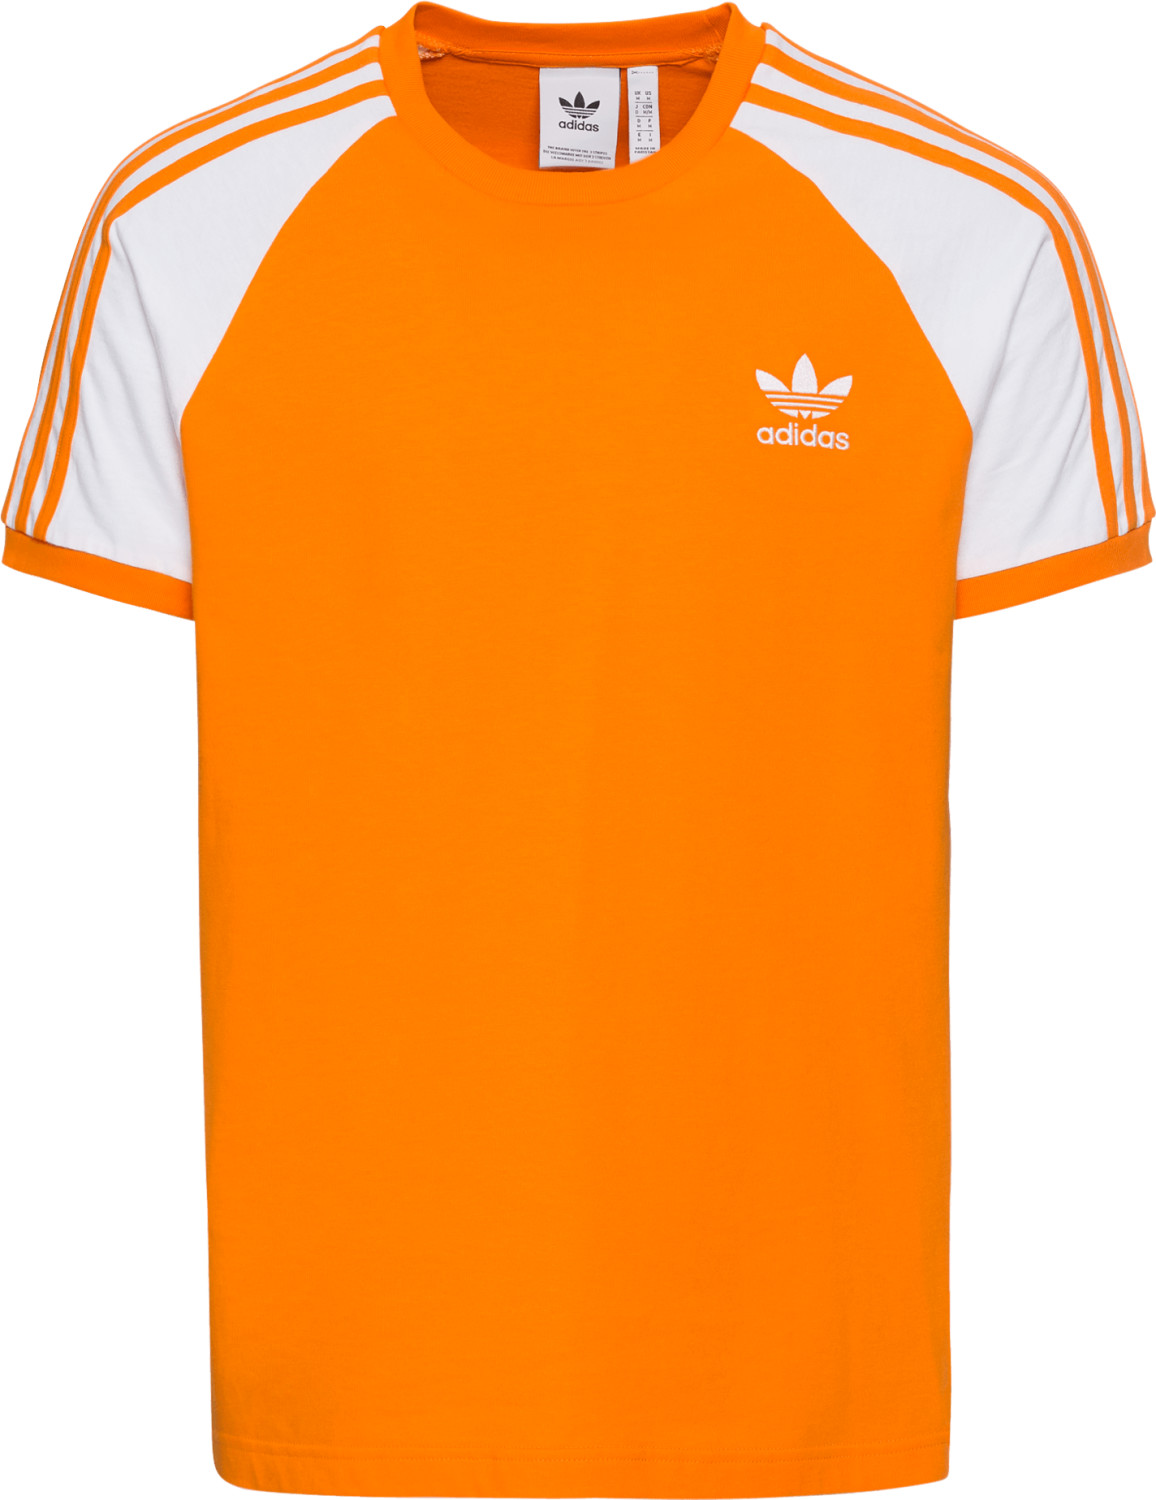 Adidas 3-Stripes T-Shirt bright orange